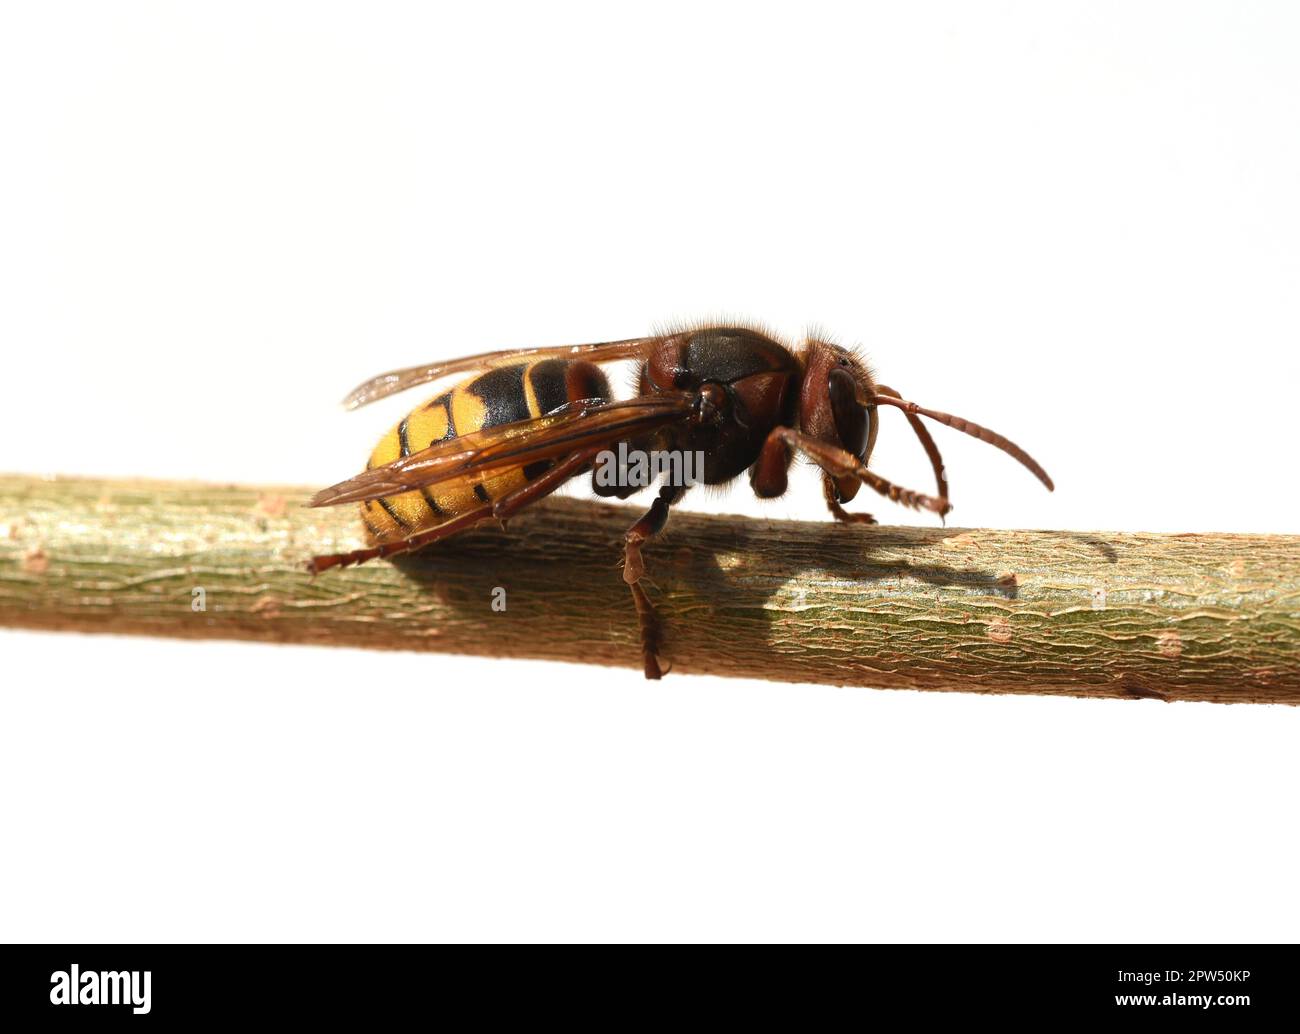 Hornisse, vespa crabro, ist die groesste heimische Wespenart und ist streng geschuetzt. Hornet, Vespa crabro, es la especie de avispa nativa más grande y yo Foto de stock